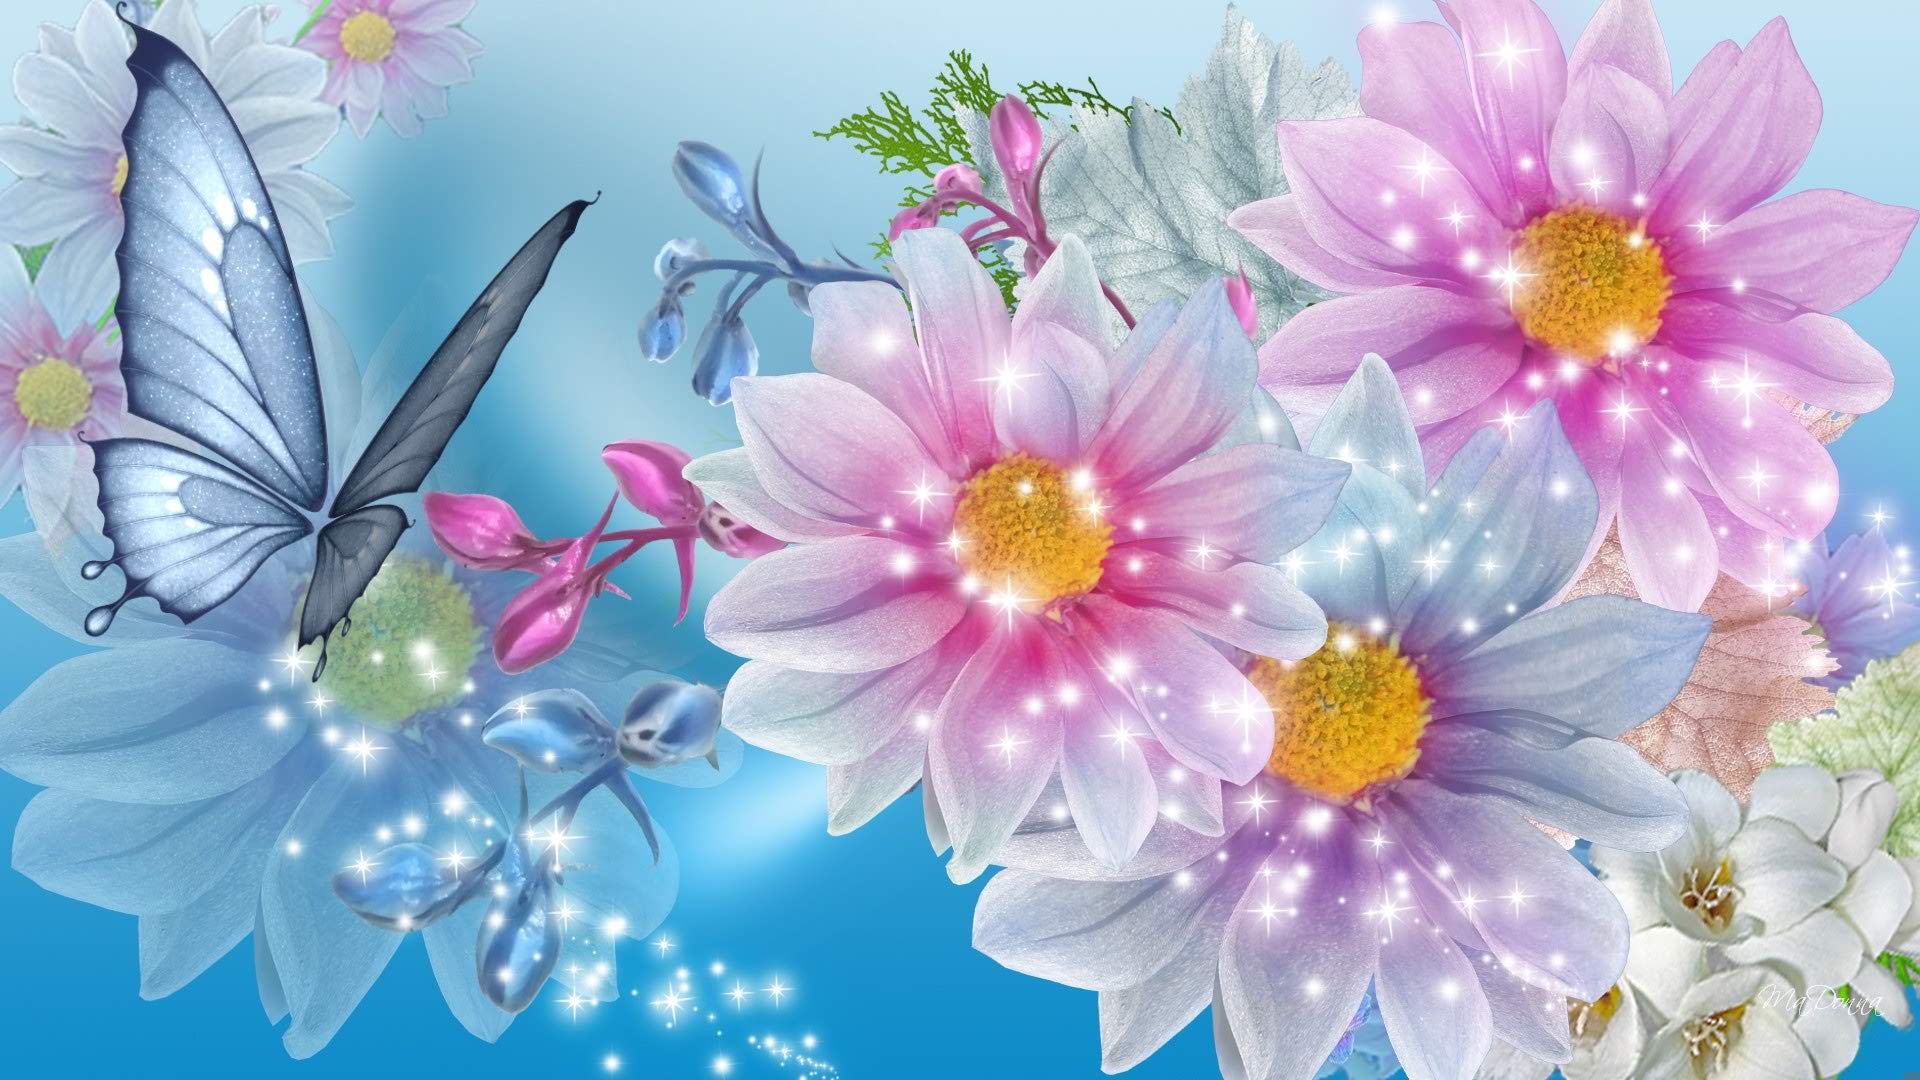 cool flower background designs